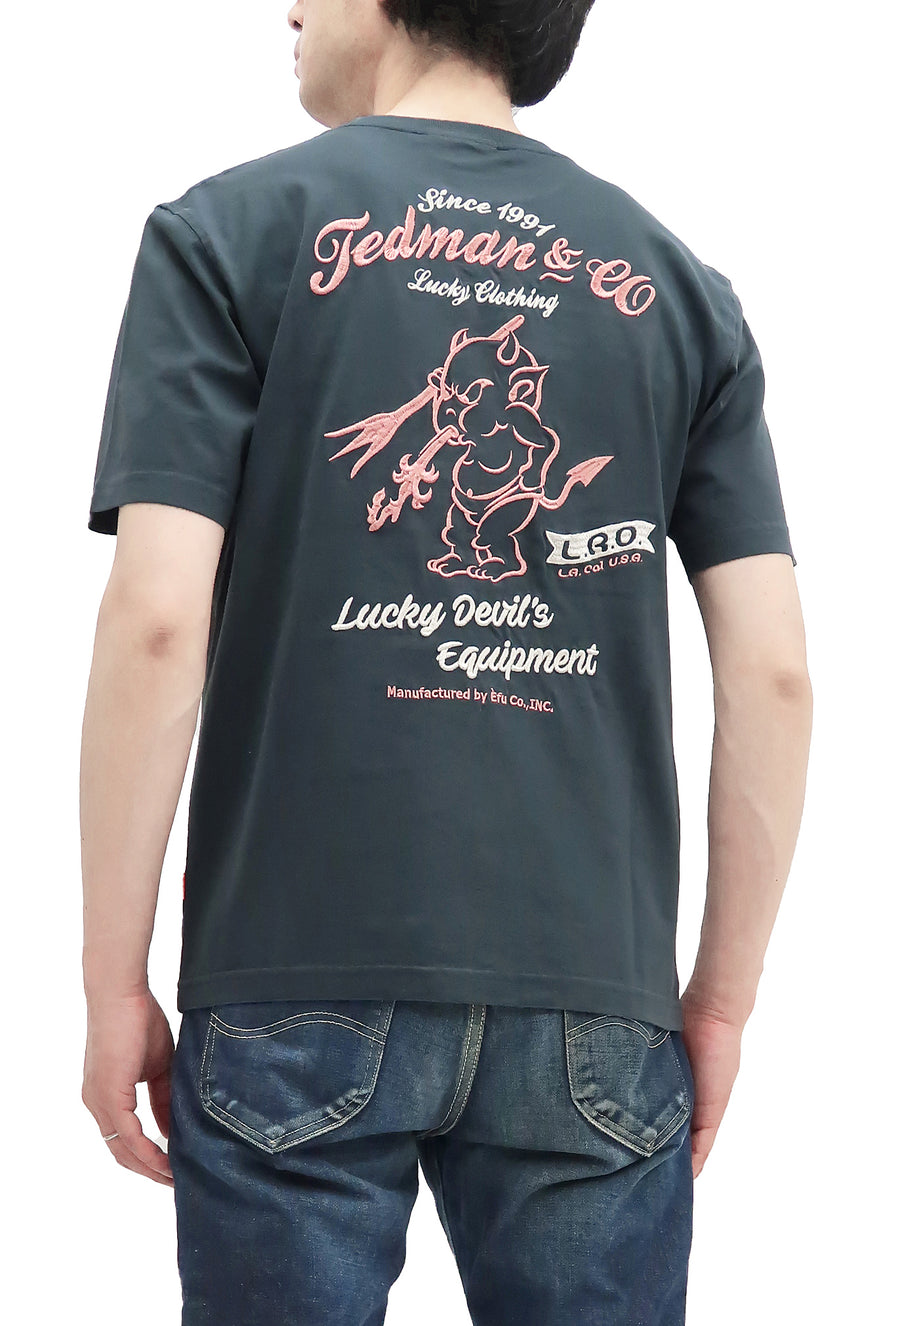 Tedman Embroidered T-Shirt Men's Lucky Devil Graphic Short Sleeve Tee Efu-Shokai TDSS-548 Faded-Dark-Blue